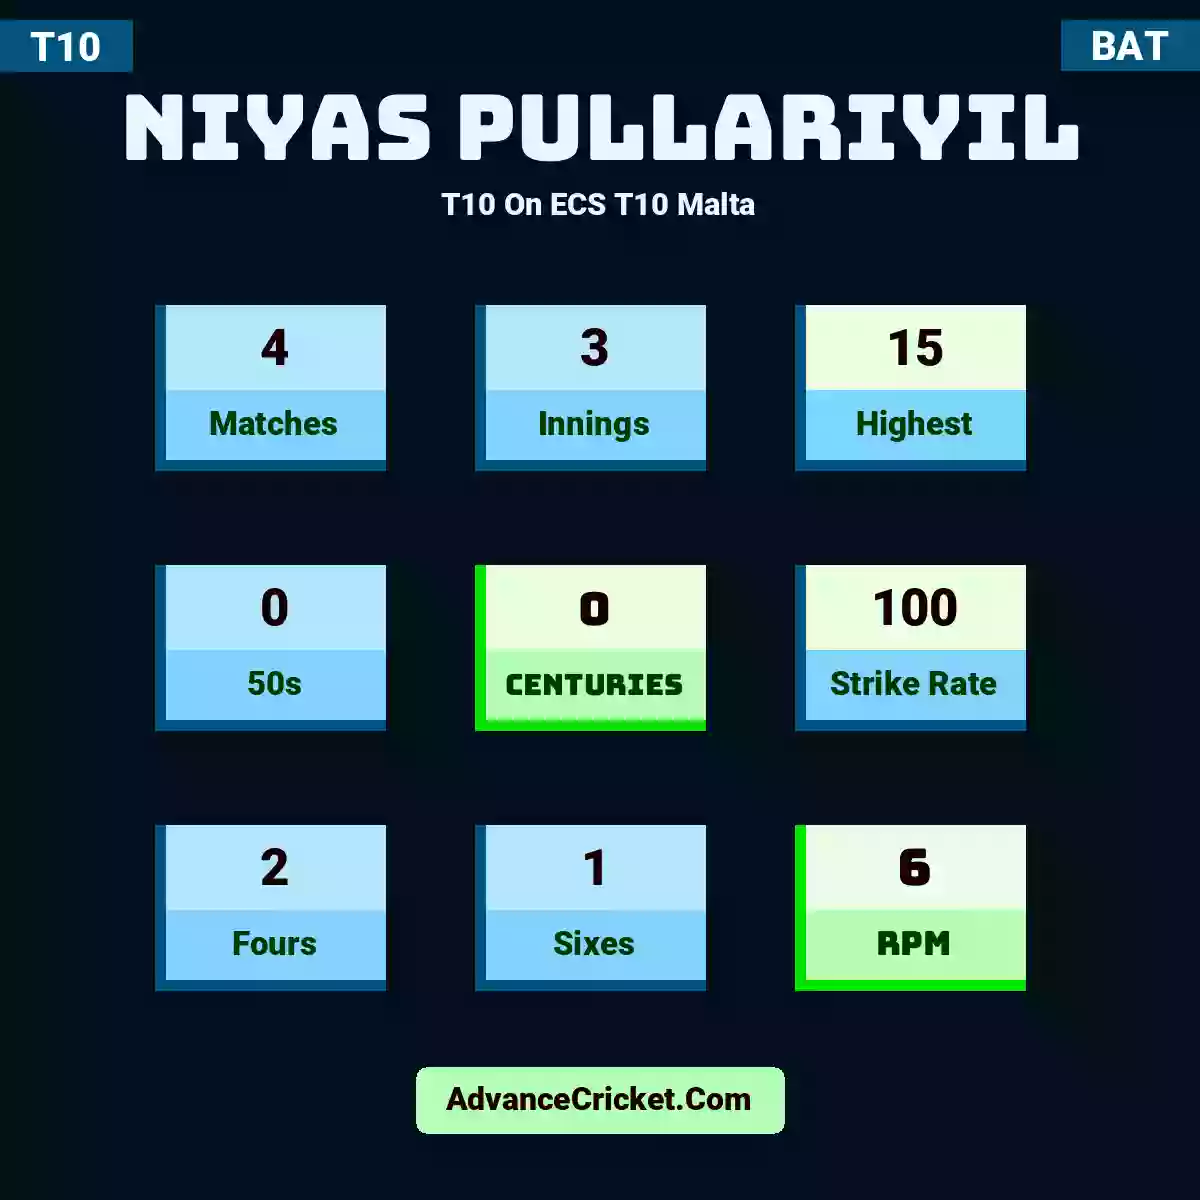 Niyas Pullariyil T10  On ECS T10 Malta, Niyas Pullariyil played 4 matches, scored 15 runs as highest, 0 half-centuries, and 0 centuries, with a strike rate of 100. N.Pullariyil hit 2 fours and 1 sixes, with an RPM of 6.